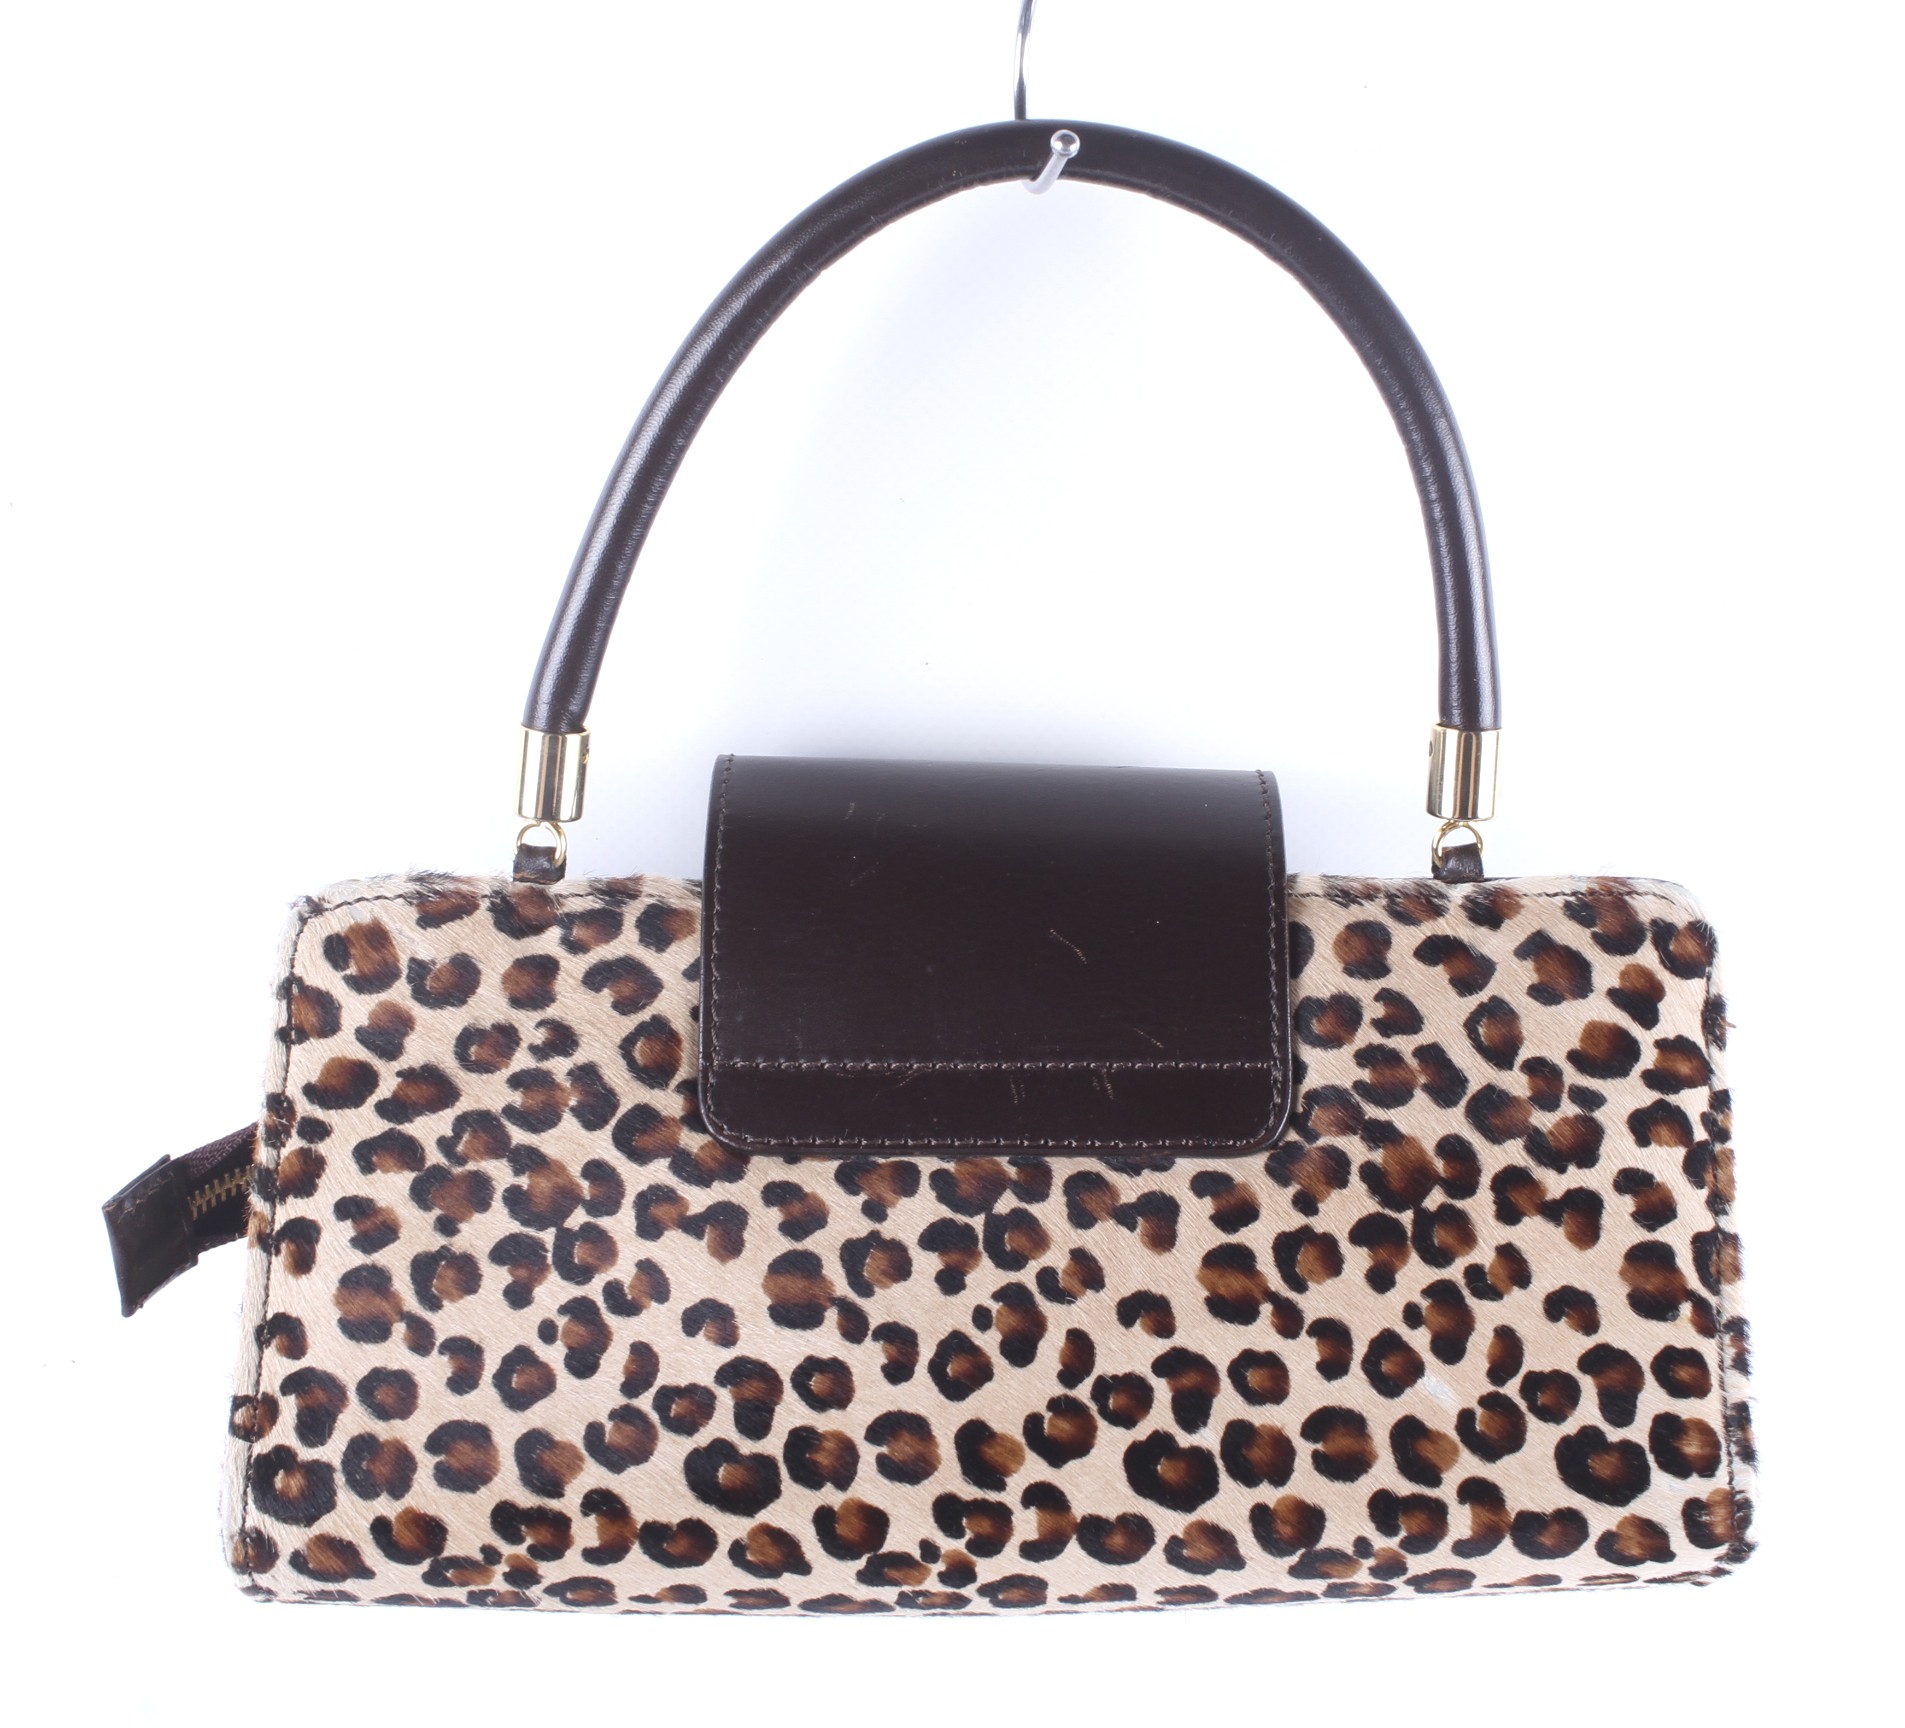 A Christian Louboutin (Paris) leopard print clutch handbag, - Image 2 of 3